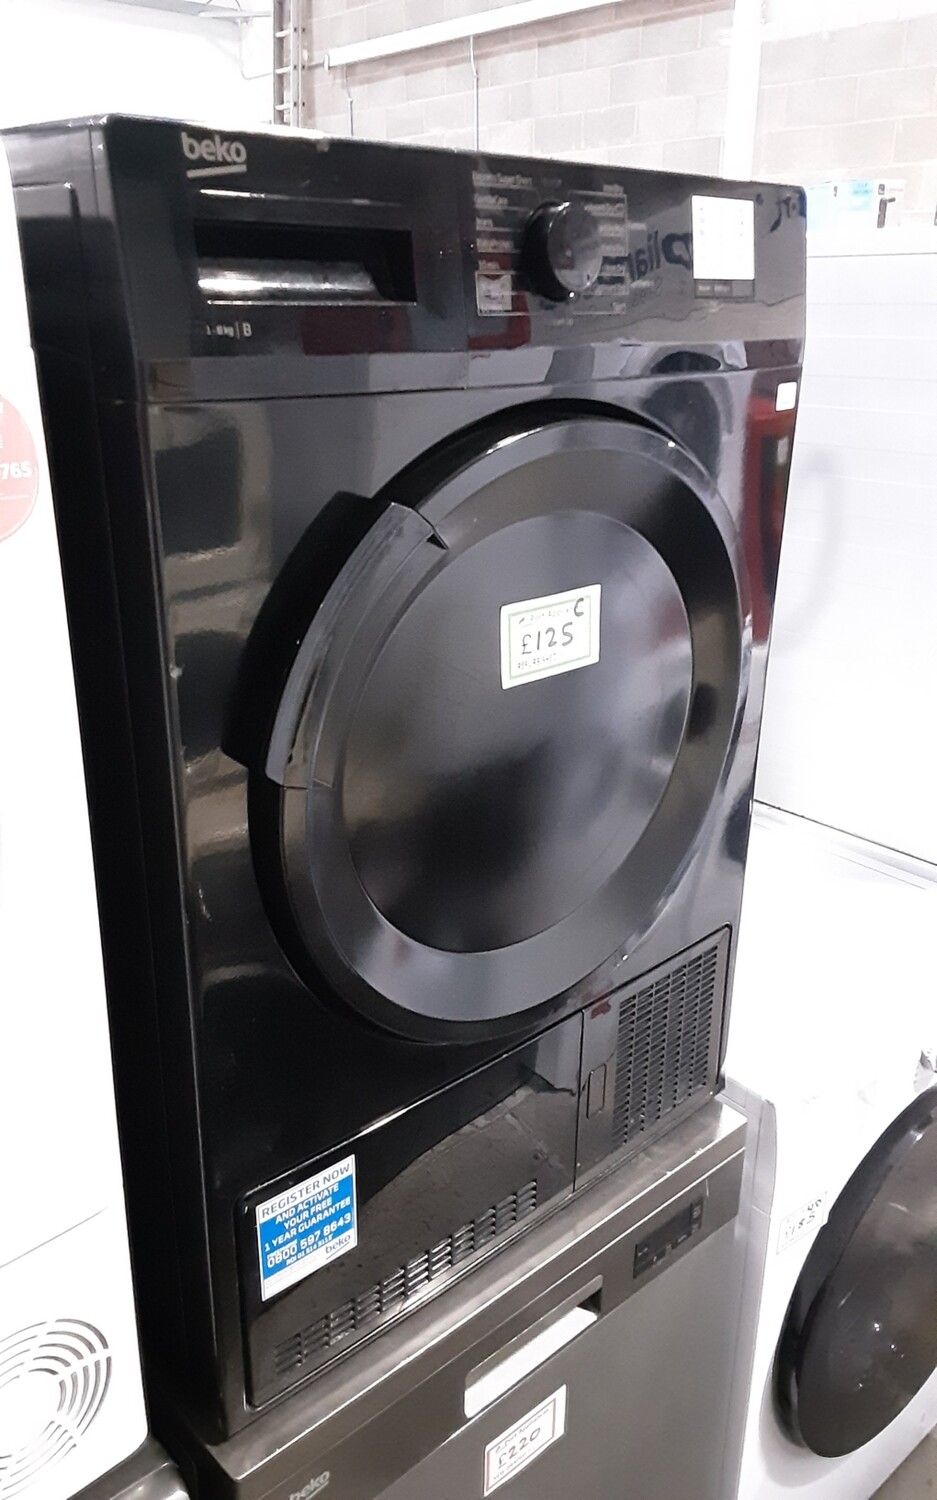 Beko DTGC8000B 8kg Condenser Dryer Black Refurbished 6 Months Guarantee 